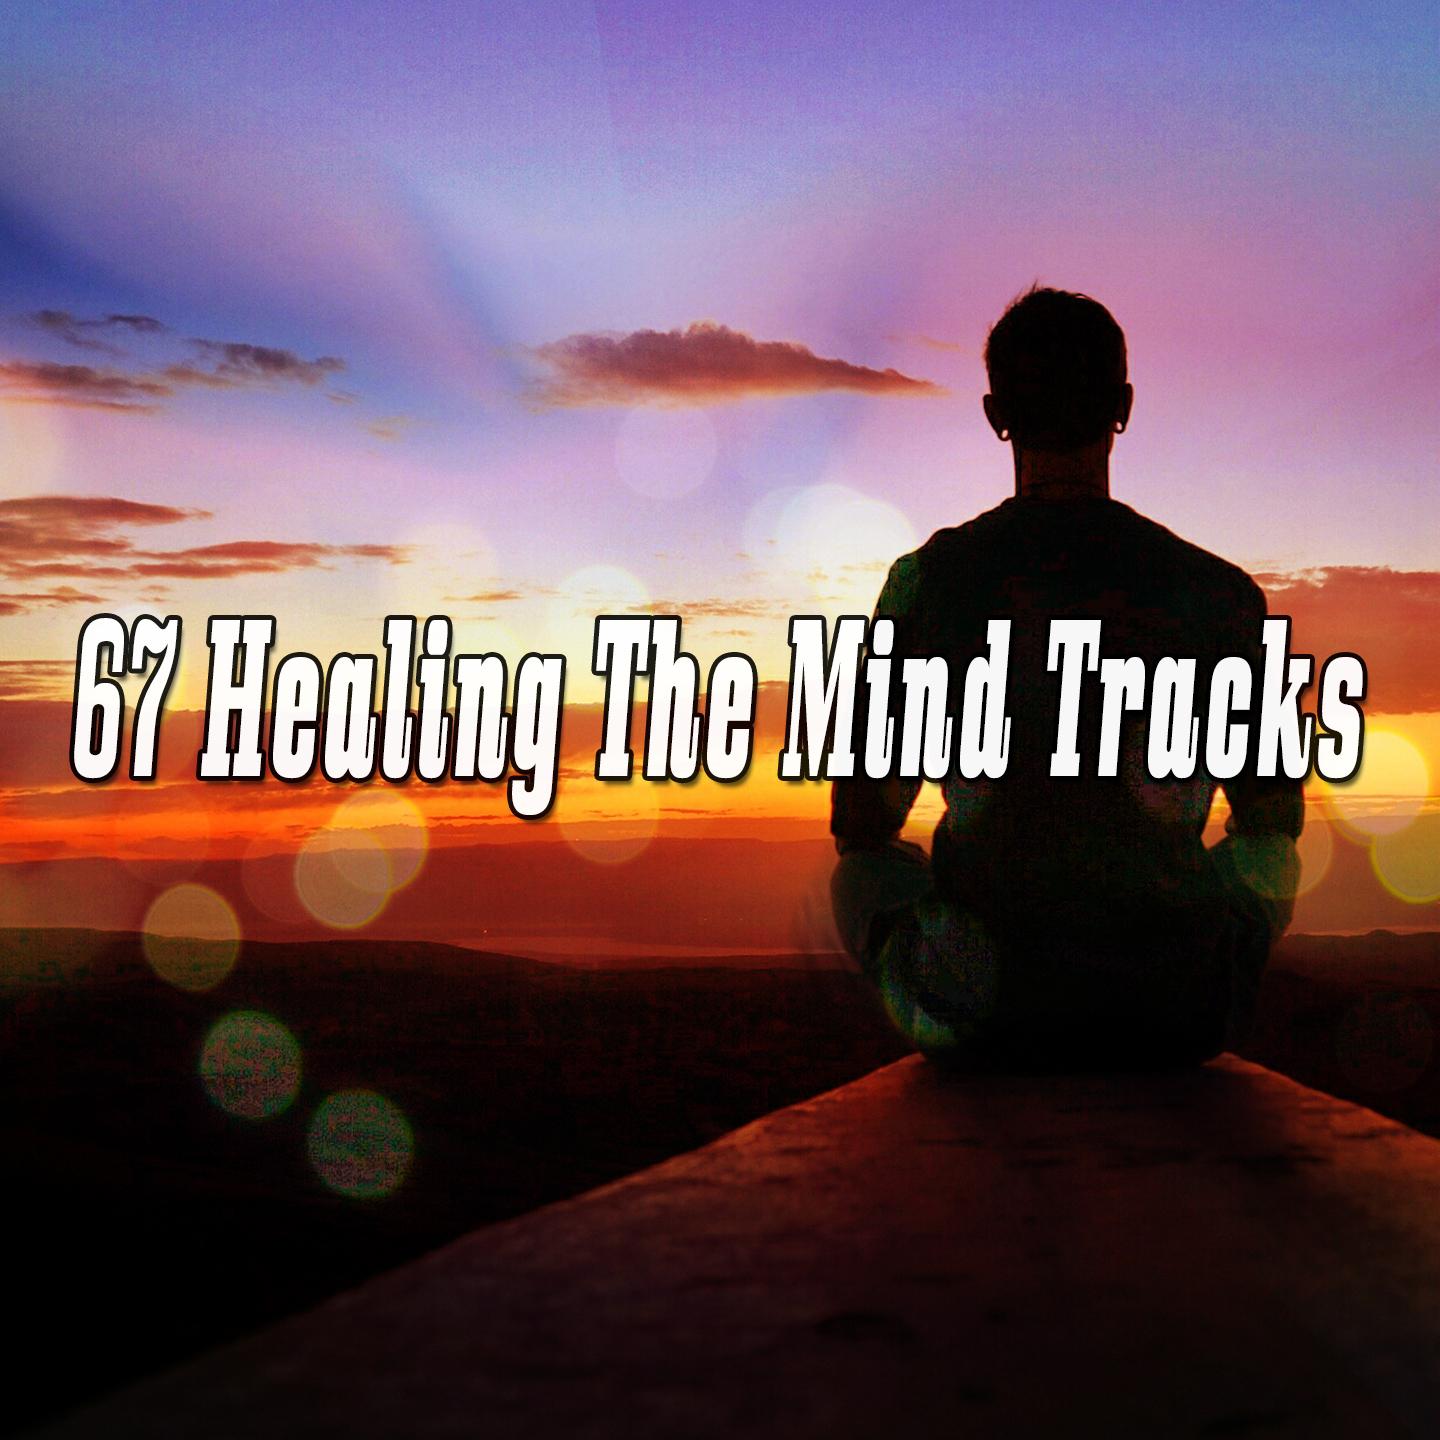 67 Healing the Mind Tracks